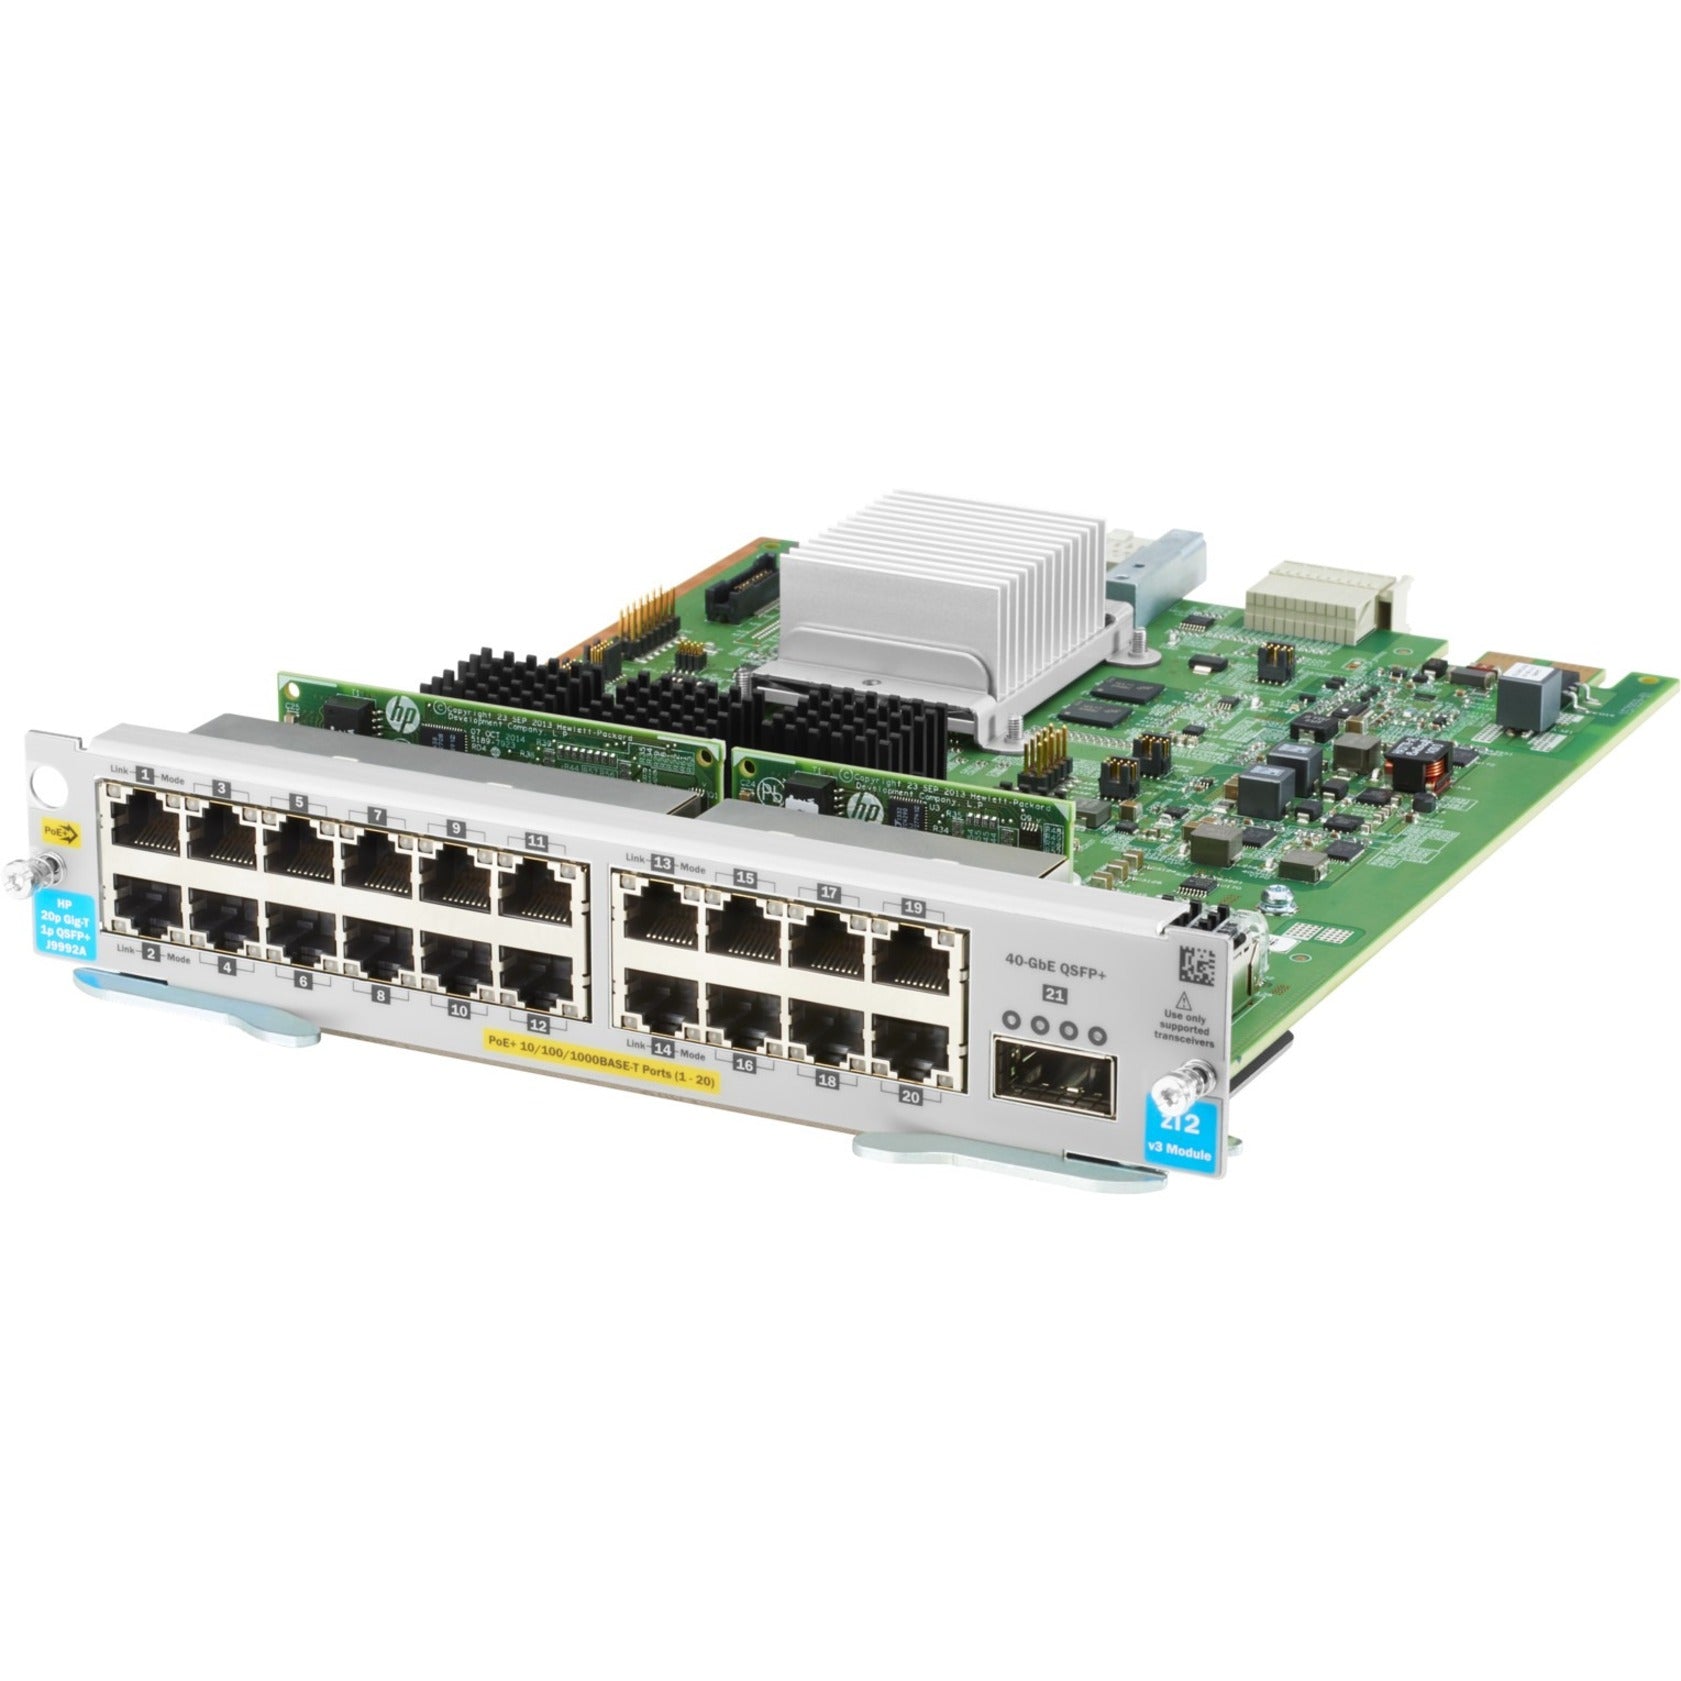 HPE J9992A 20-port 10/100/1000BASE-T PoE+ MACsec / 1-port 40GbE QSFP+ v3 zl2 Module, High-Speed Networking Solution